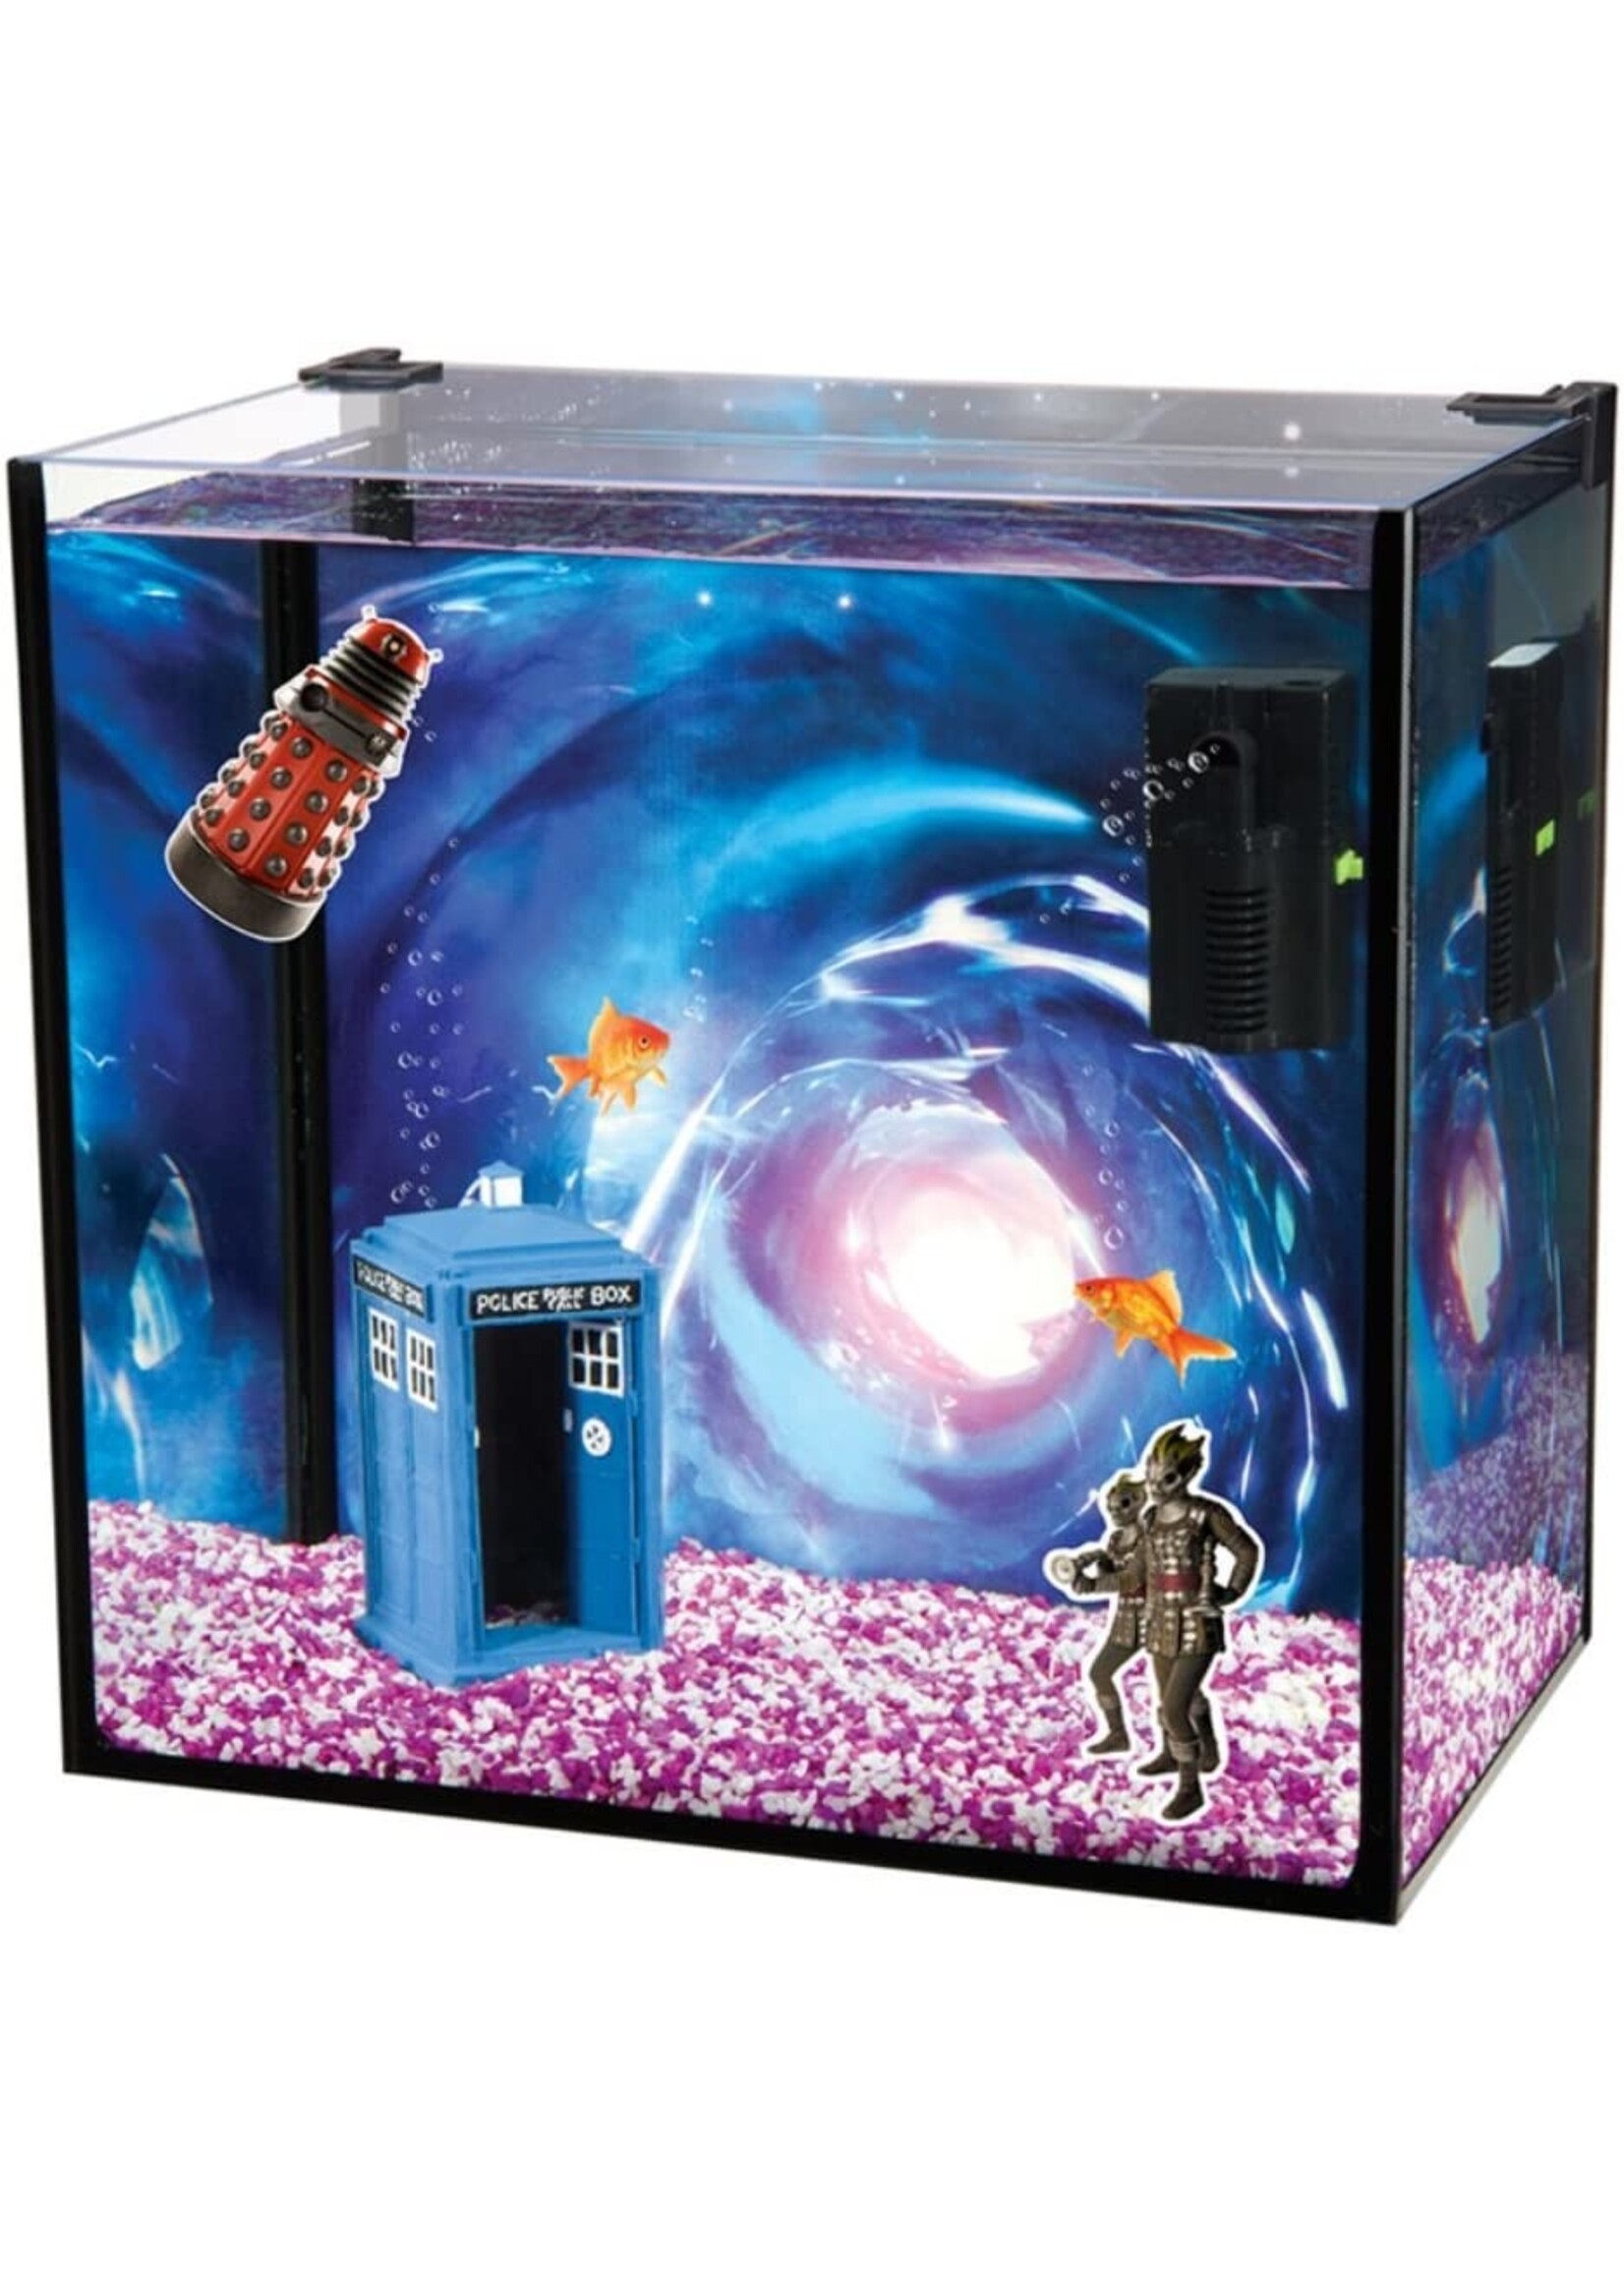 Penn Plax Penn Plax Doctor Who Aquarium Kit 4gallon